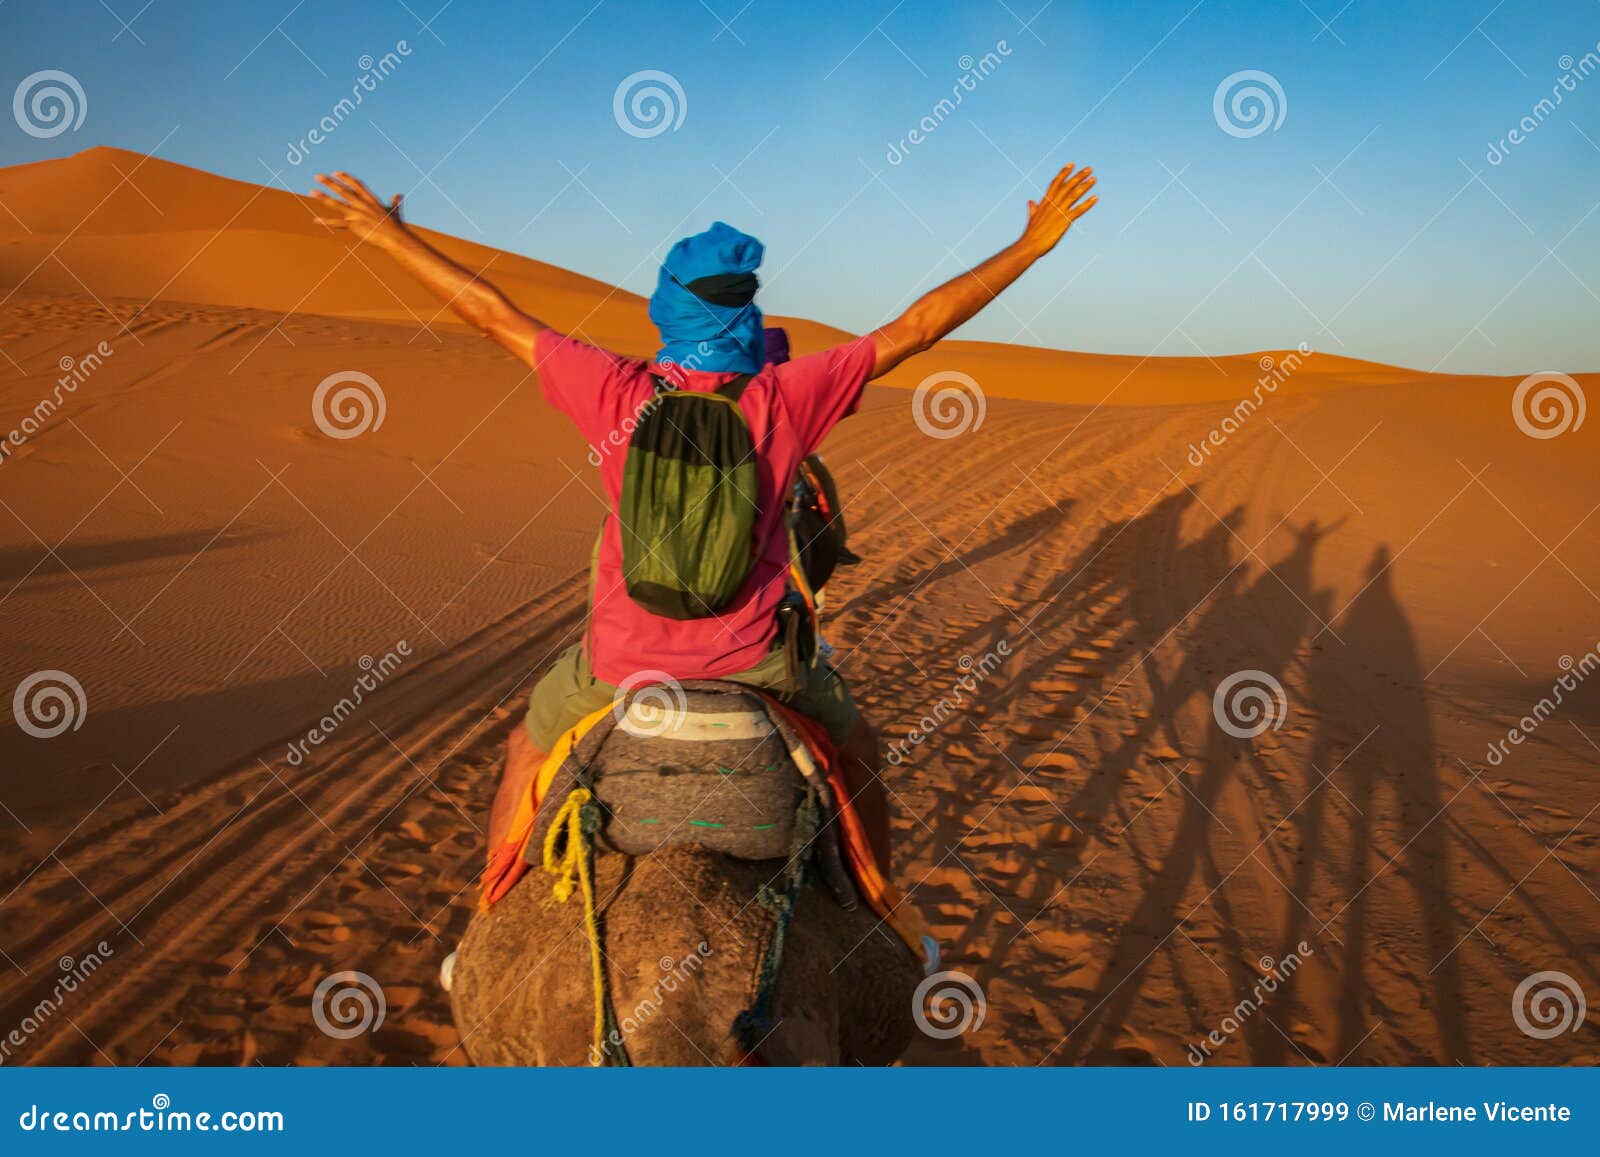 travesia en camello por el desierto del sahara. erg chebbi. merzouga. marruecos